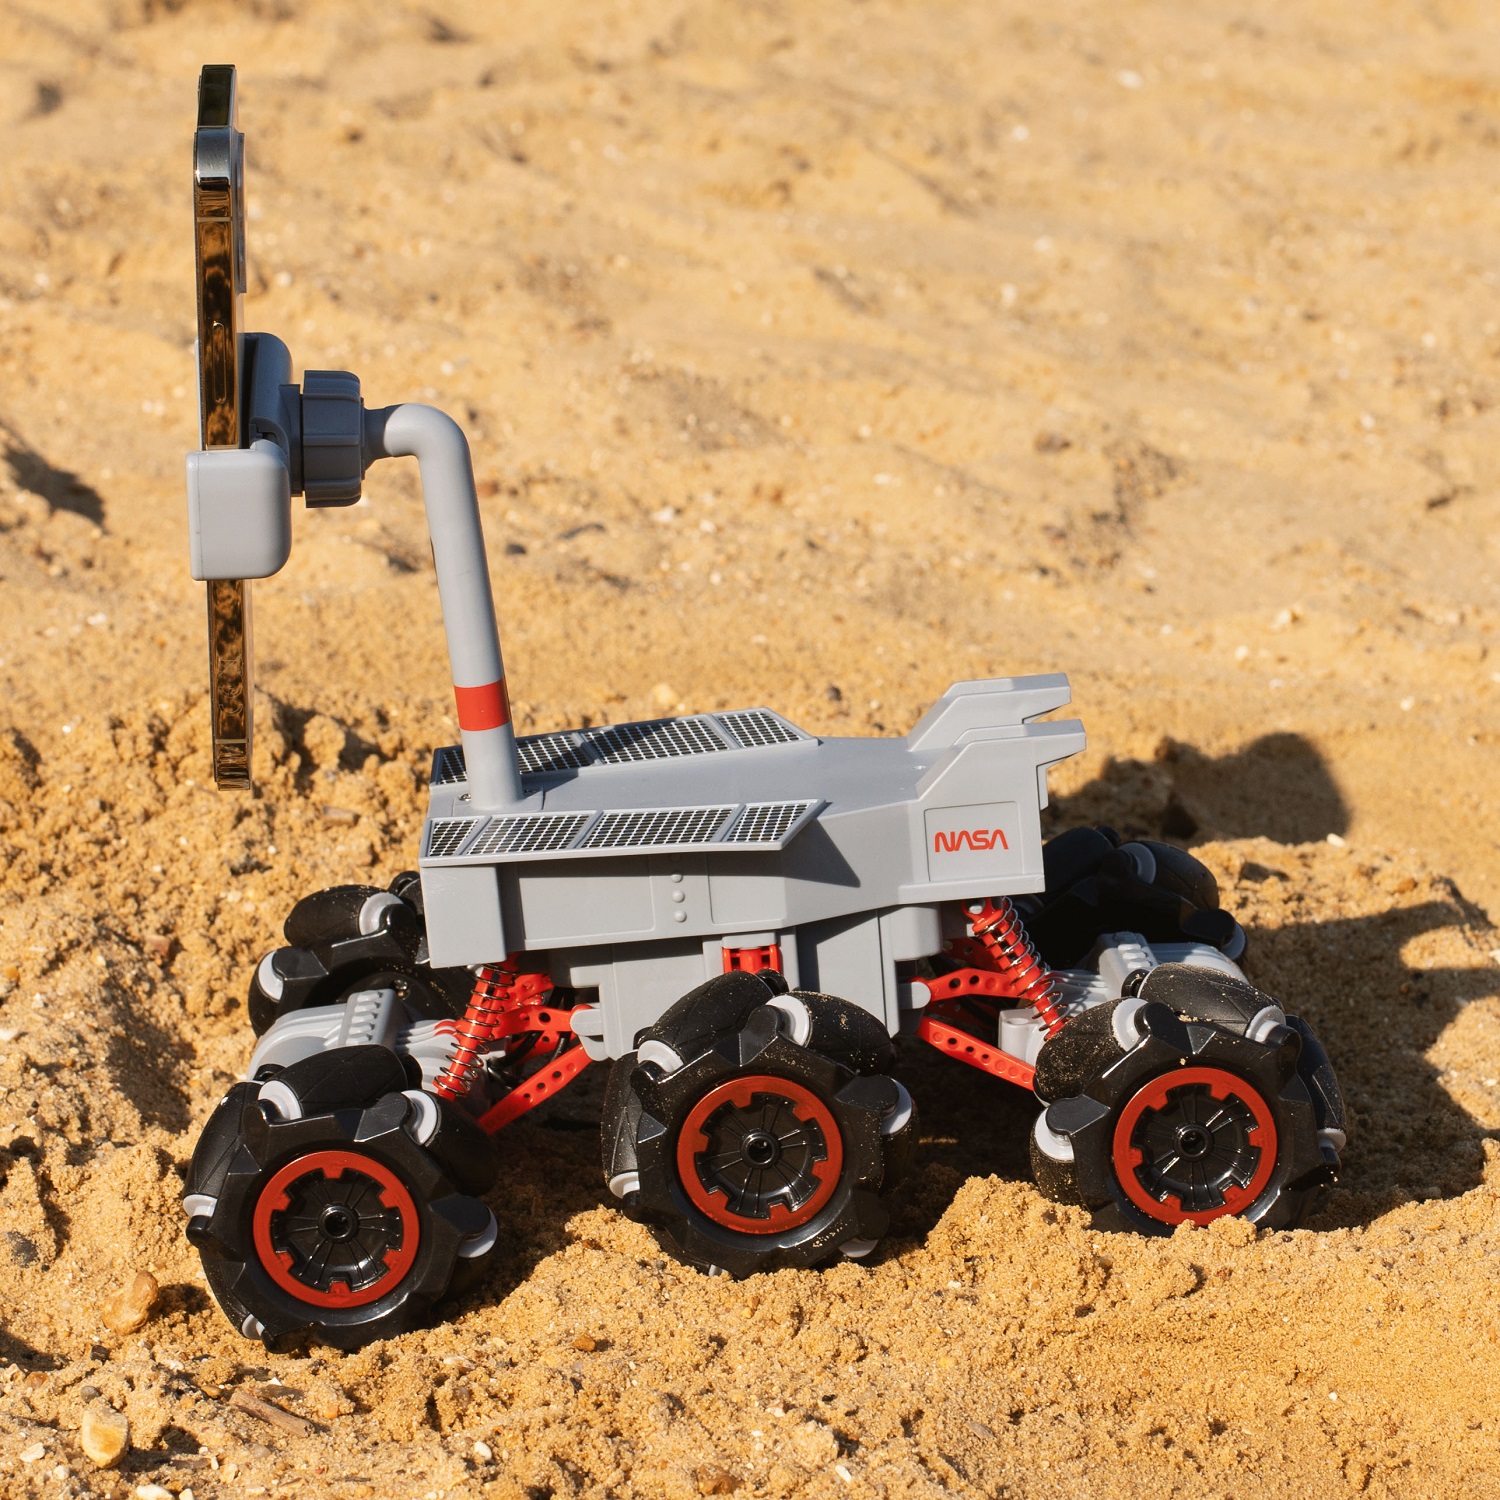 Mars Rover NASA RC (Opportunity Rover)